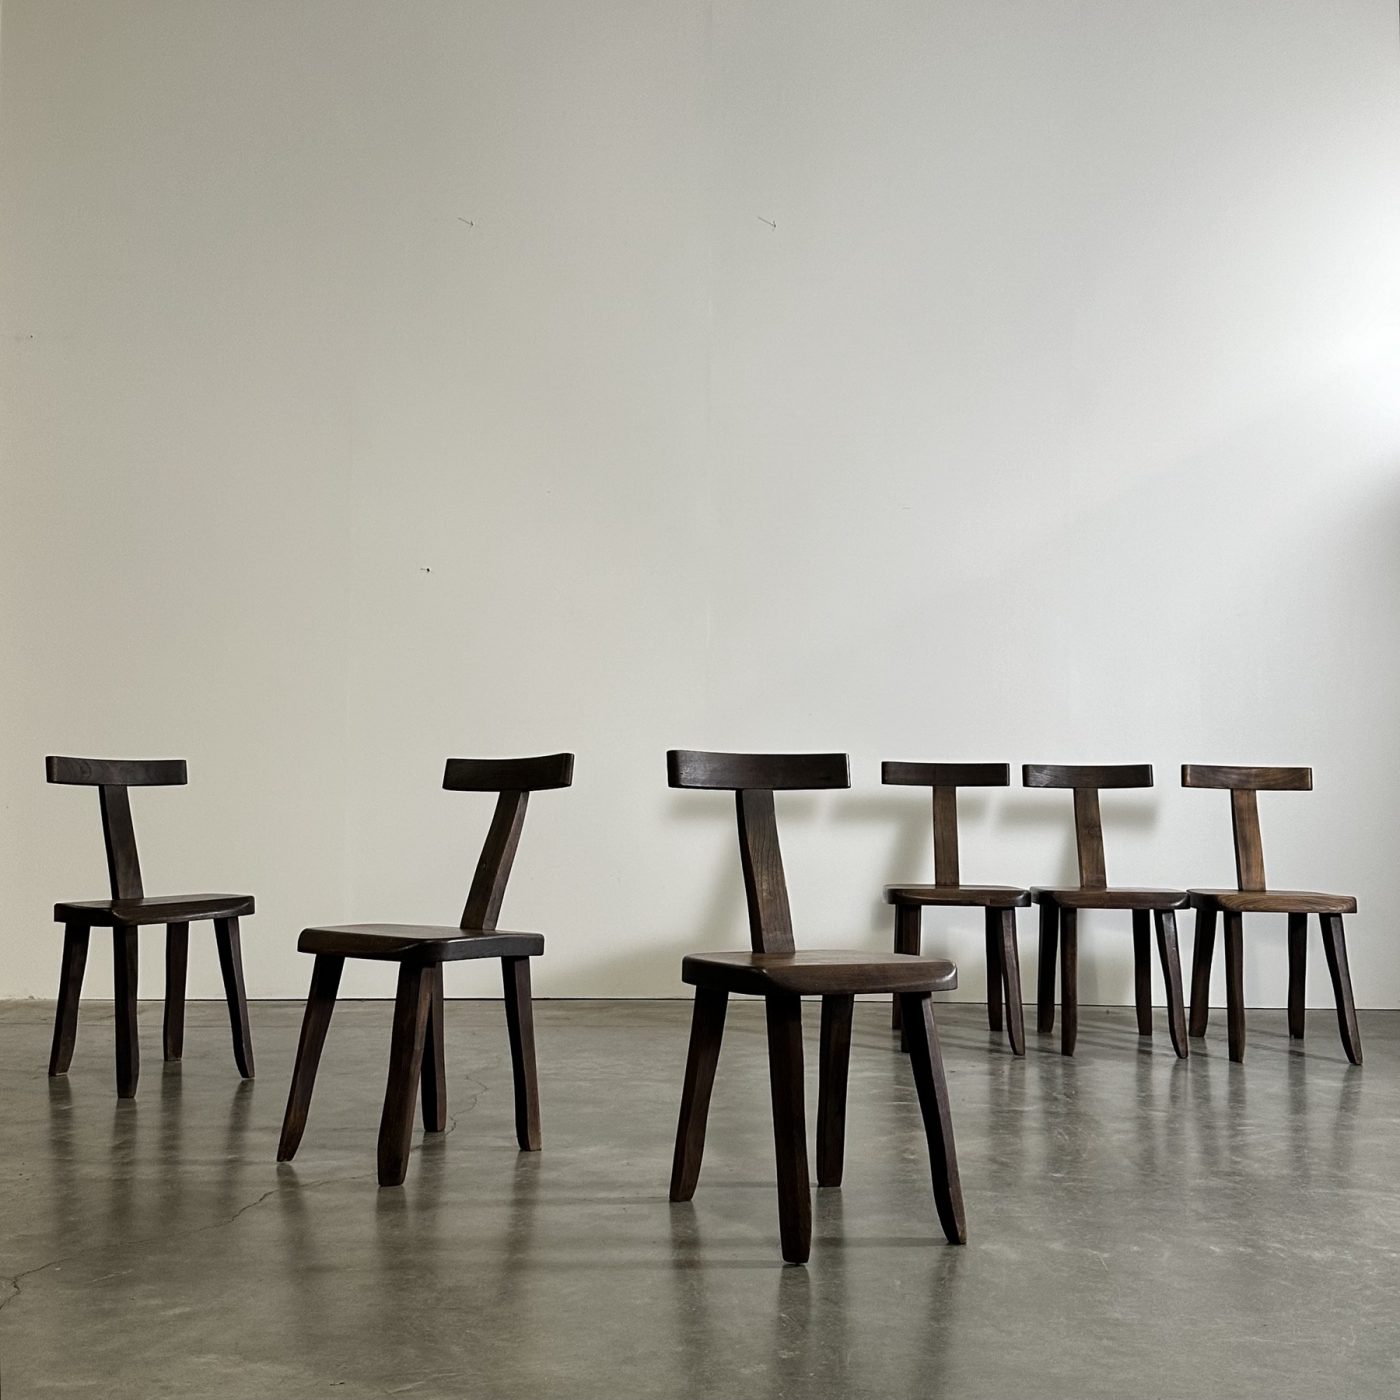 objet-vagabond-t-chairs0003